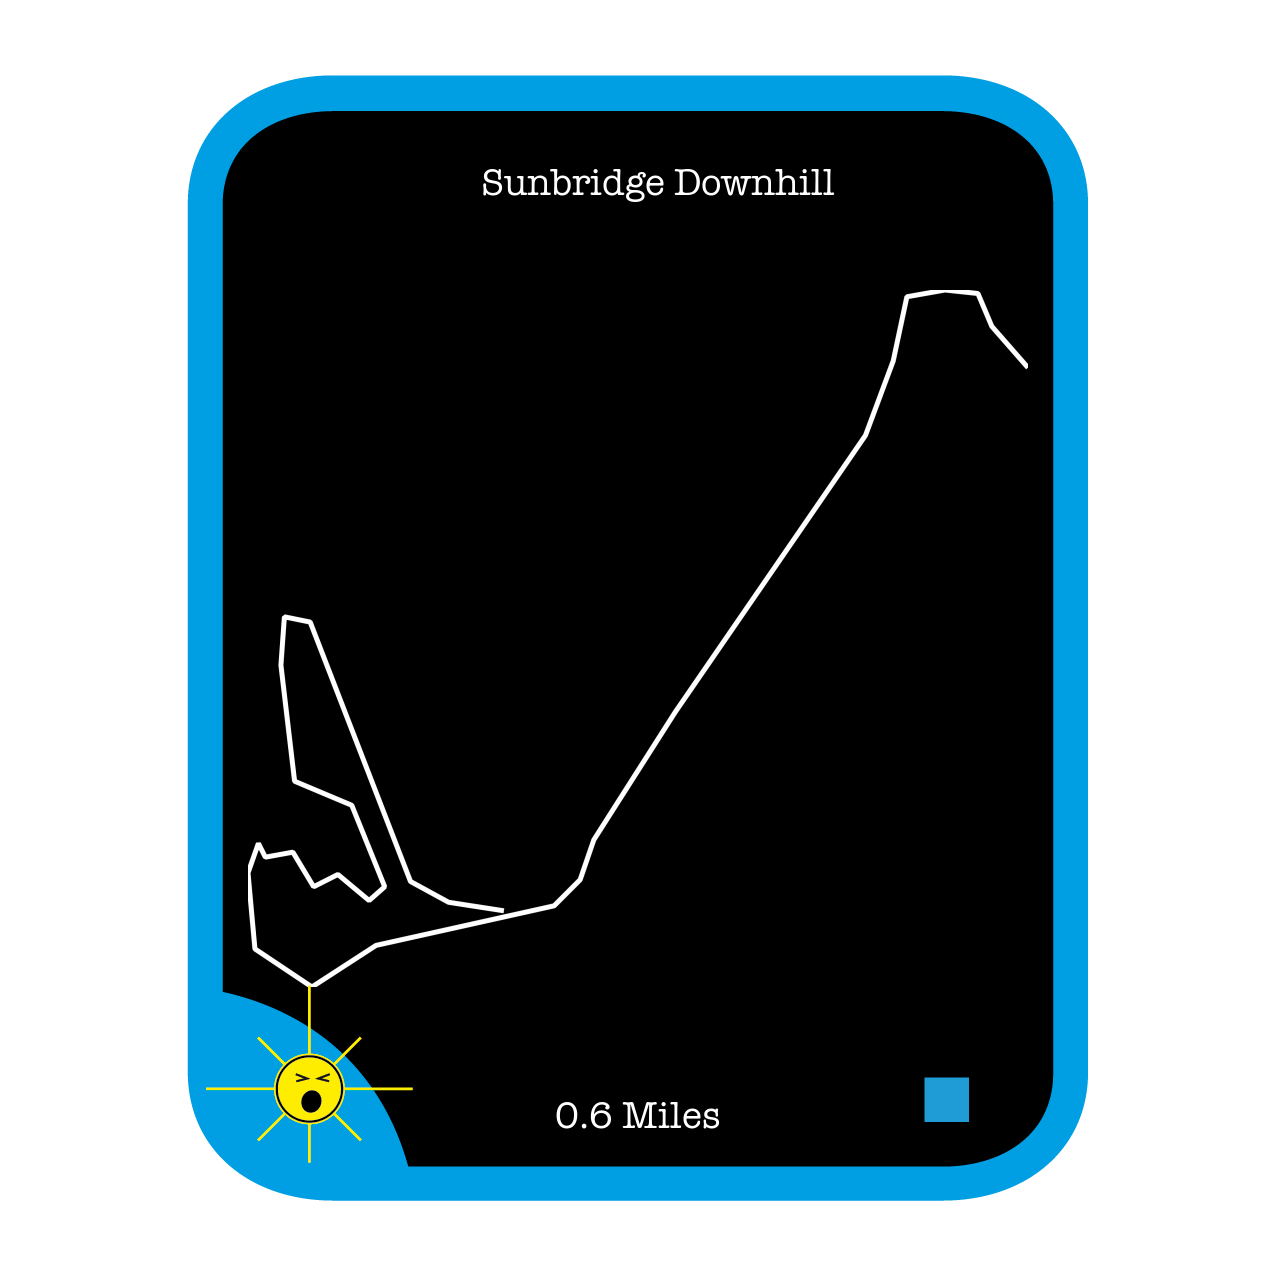 Sunbridge Downhill